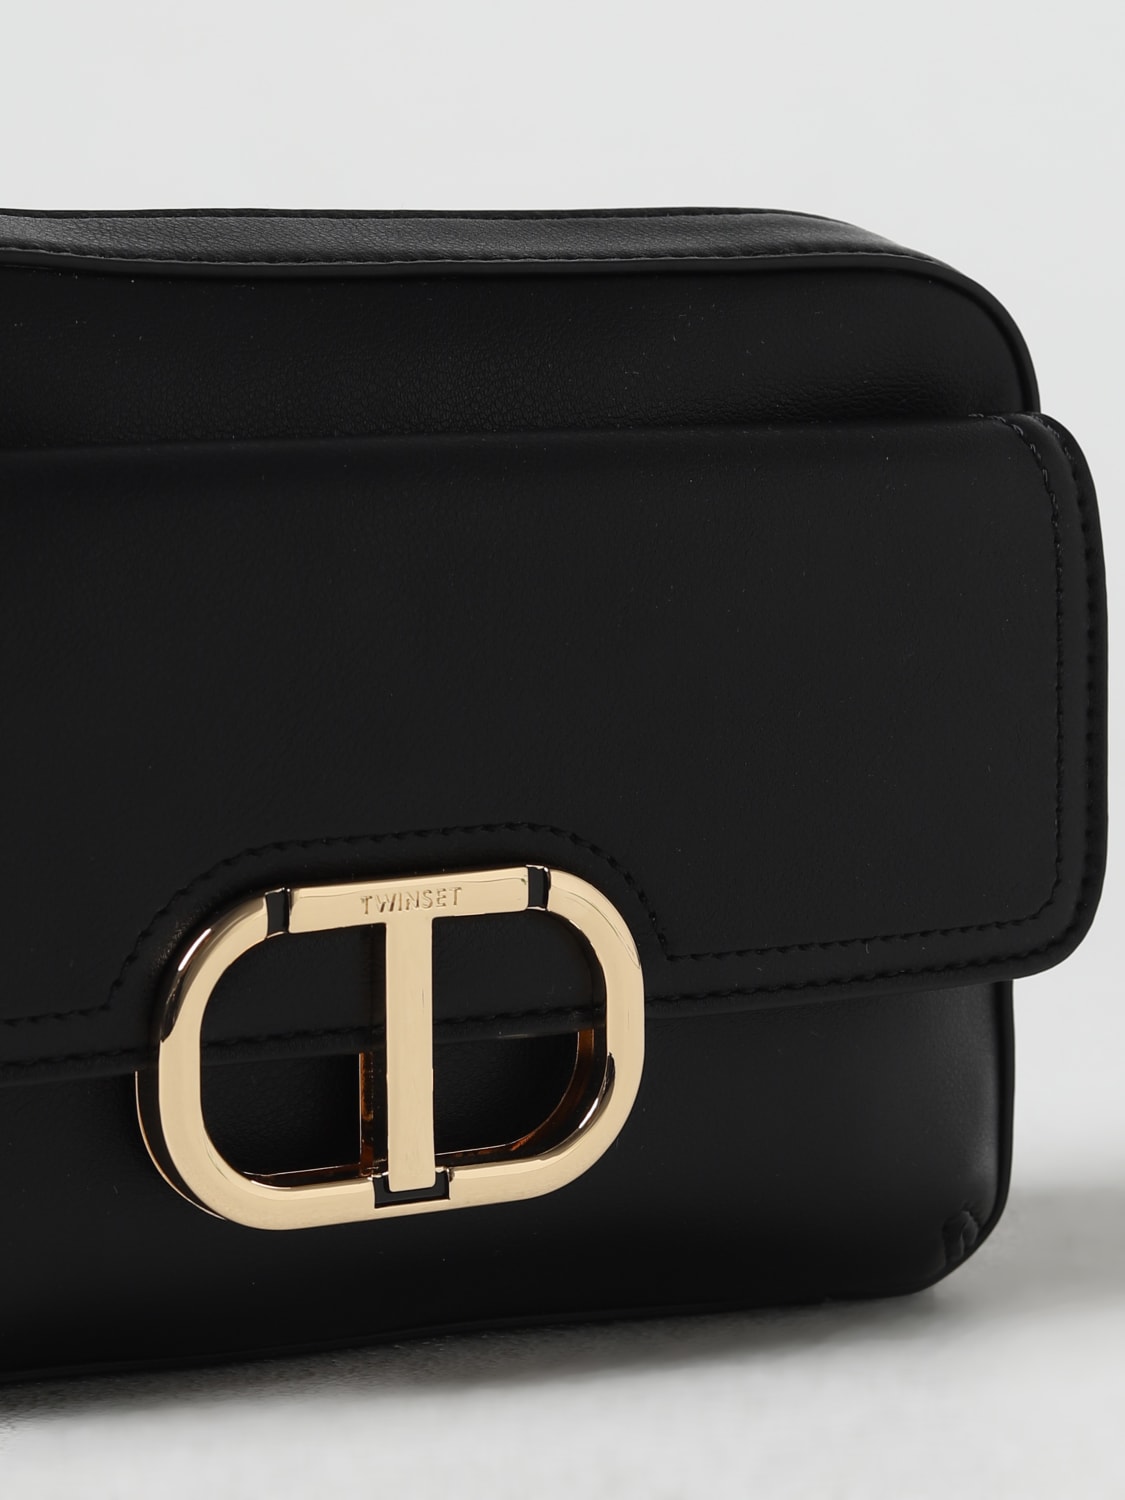 Twinset Logo-lettering Crossbody Bag in Black